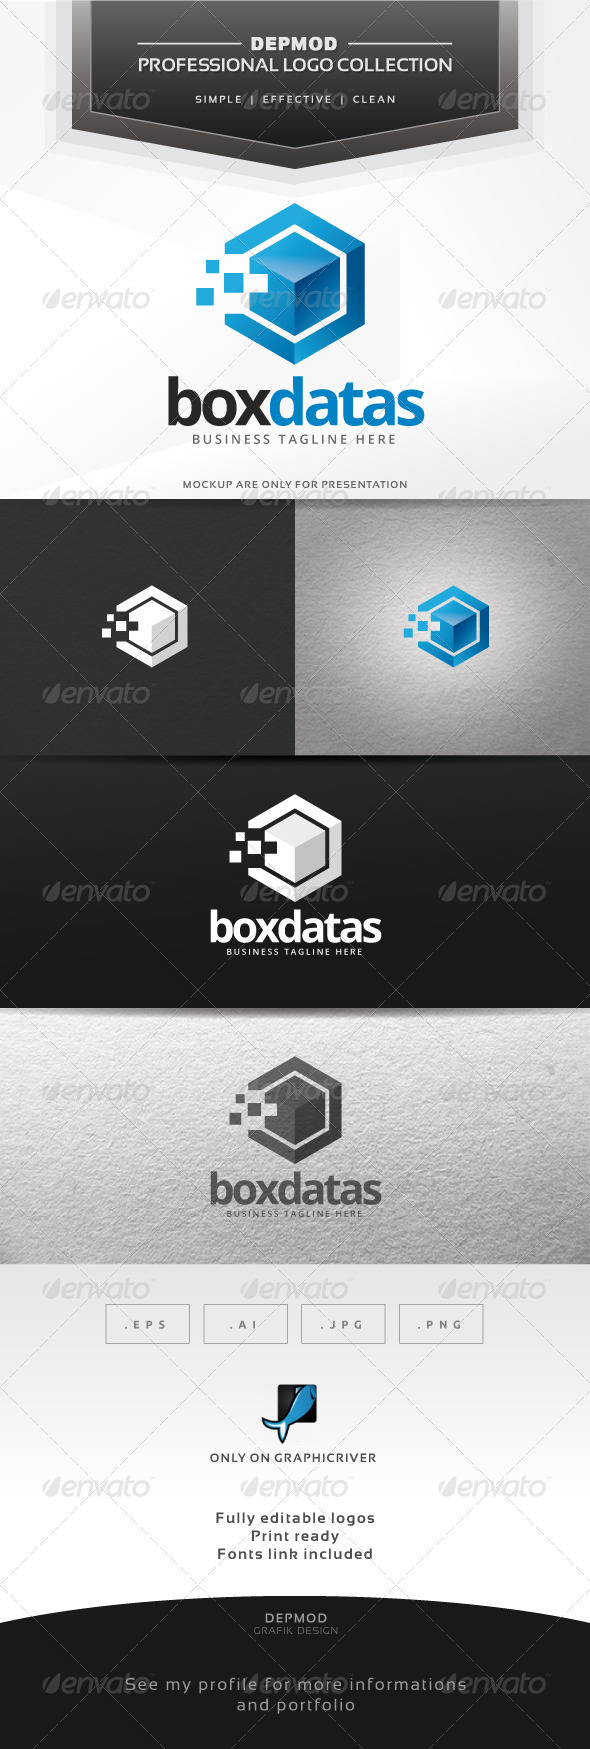 Box Datas Logo